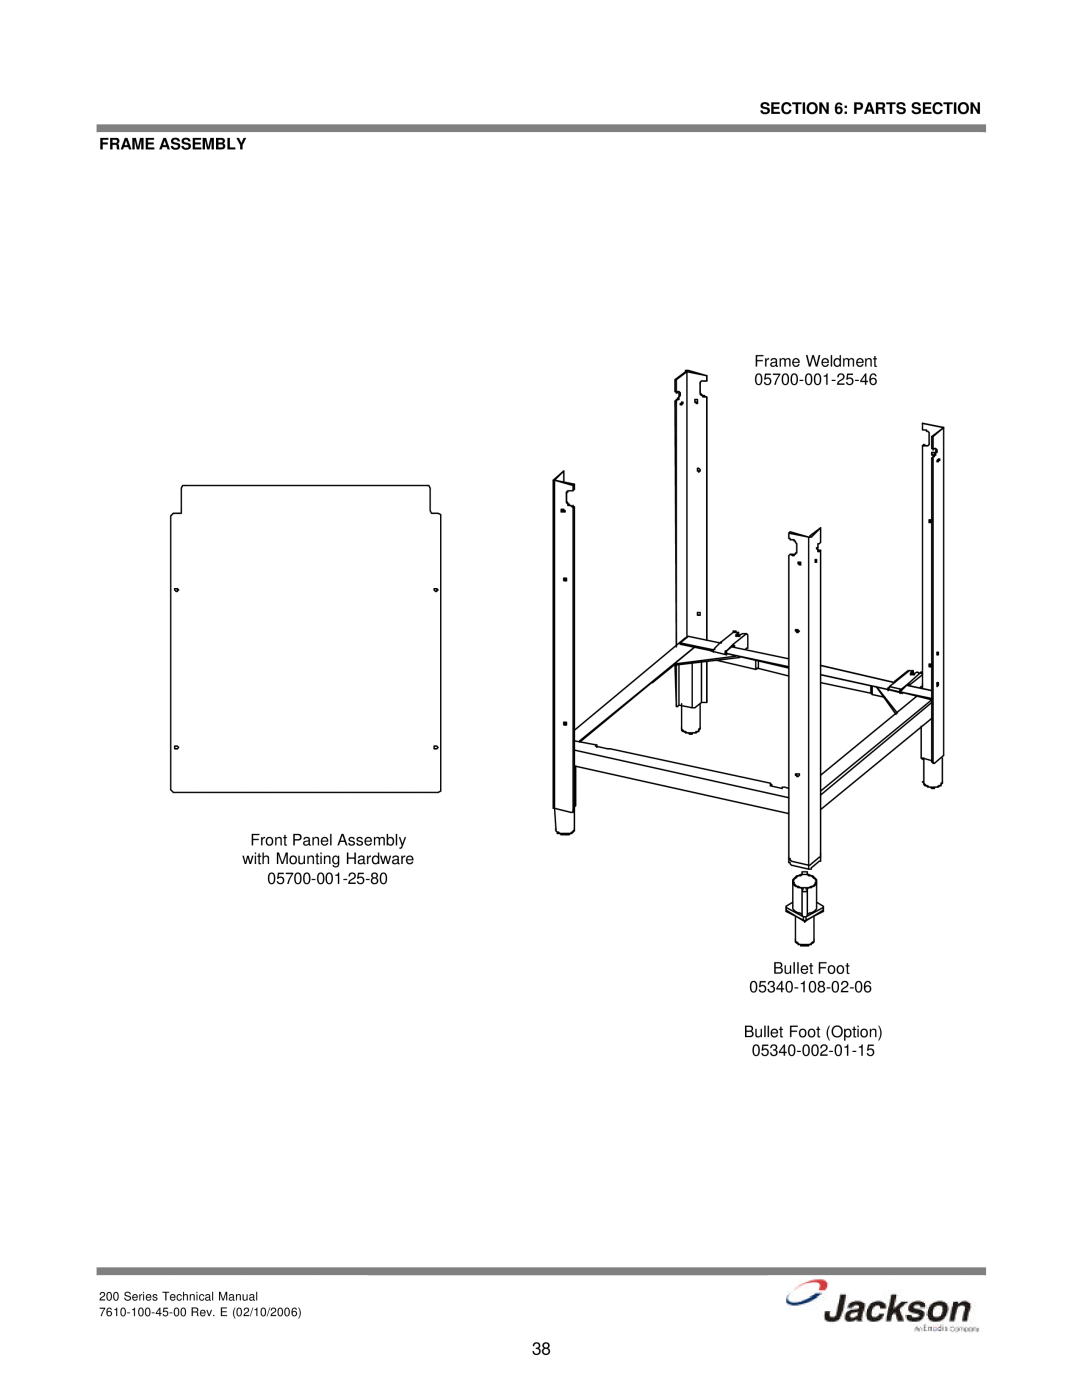 Jackson 200B, 200S, 200LT technical manual Parts Section Frame Assembly, Frame Weldment, Bullet Foot Bullet Foot Option 